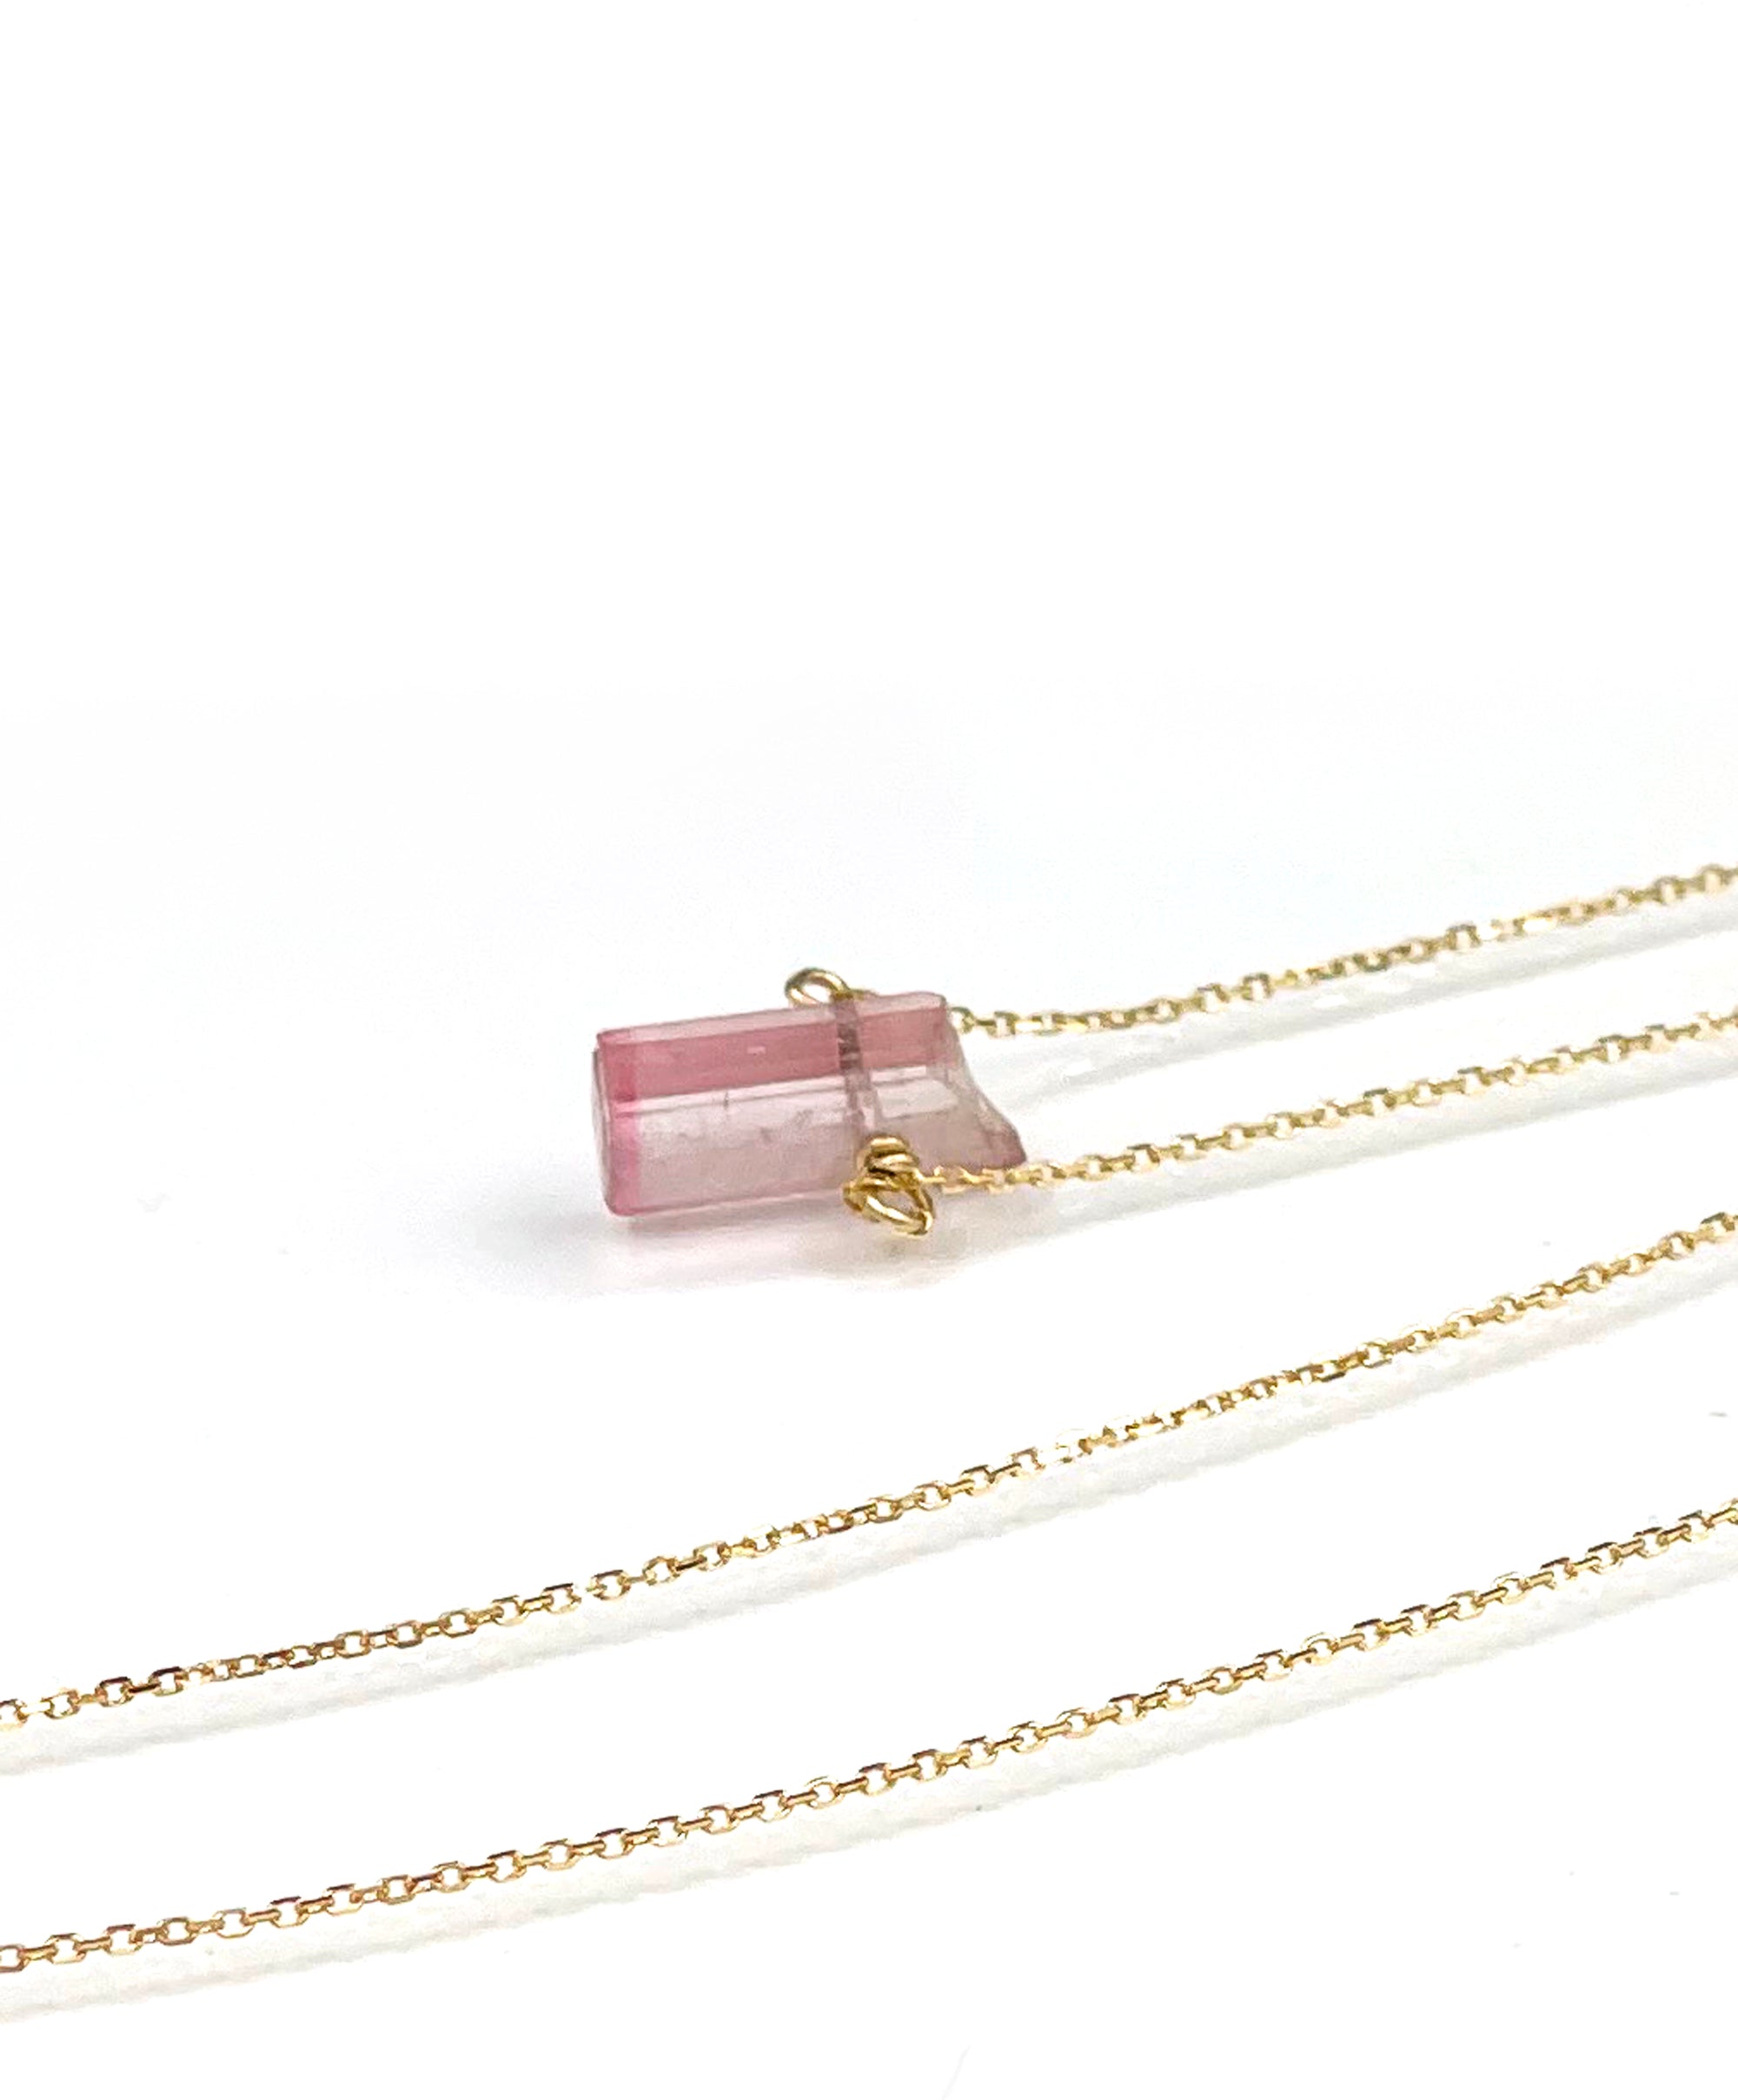 14K Pink Tourmaline Necklace, Bicolor Pink Tourmaline Crystal, Solid Gold